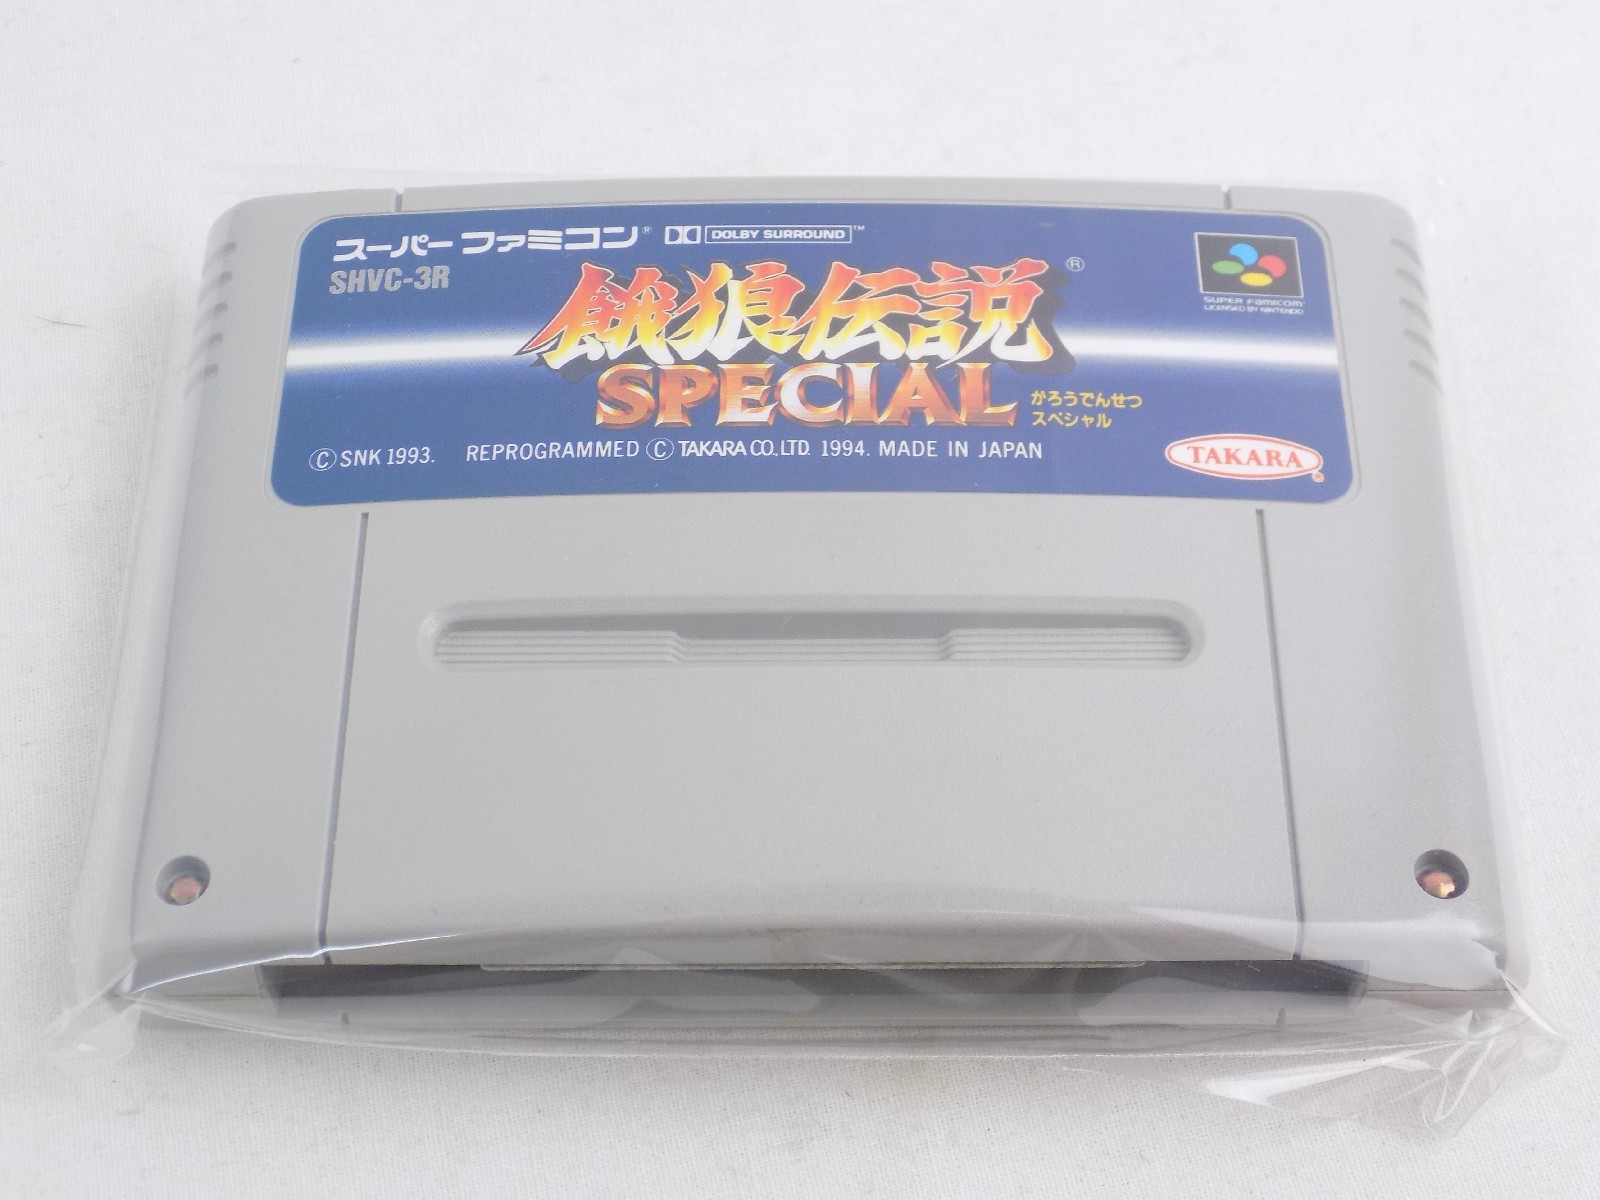 Fatal Fury Special (Super Nintendo Entertainment System, 1993